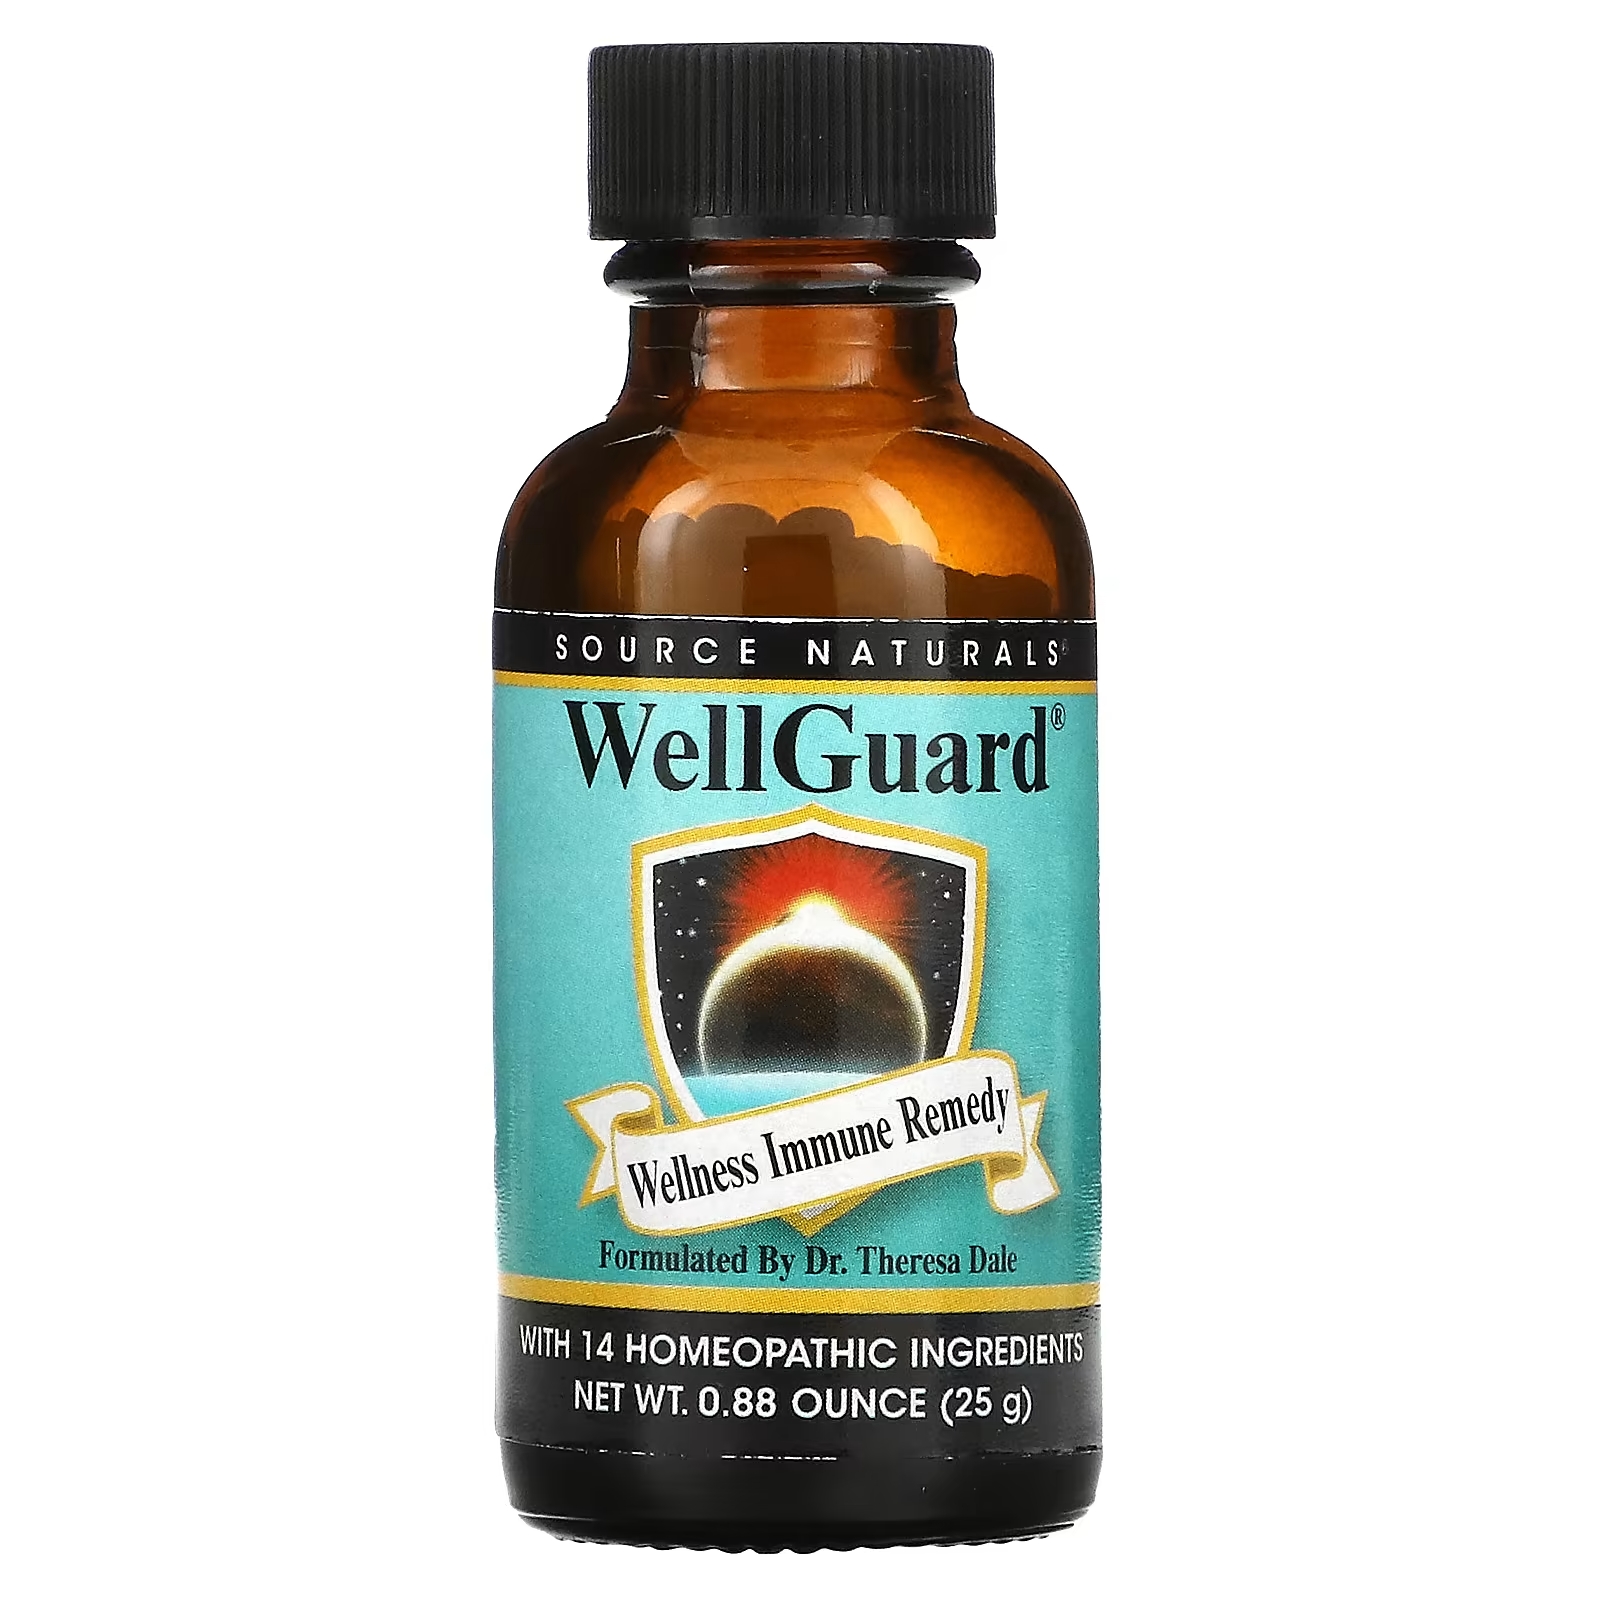 Source Naturals WellGuard поддержка иммунитета, 565шт source naturals wellguard поддержка иммунитета 25 г 0 88 унции